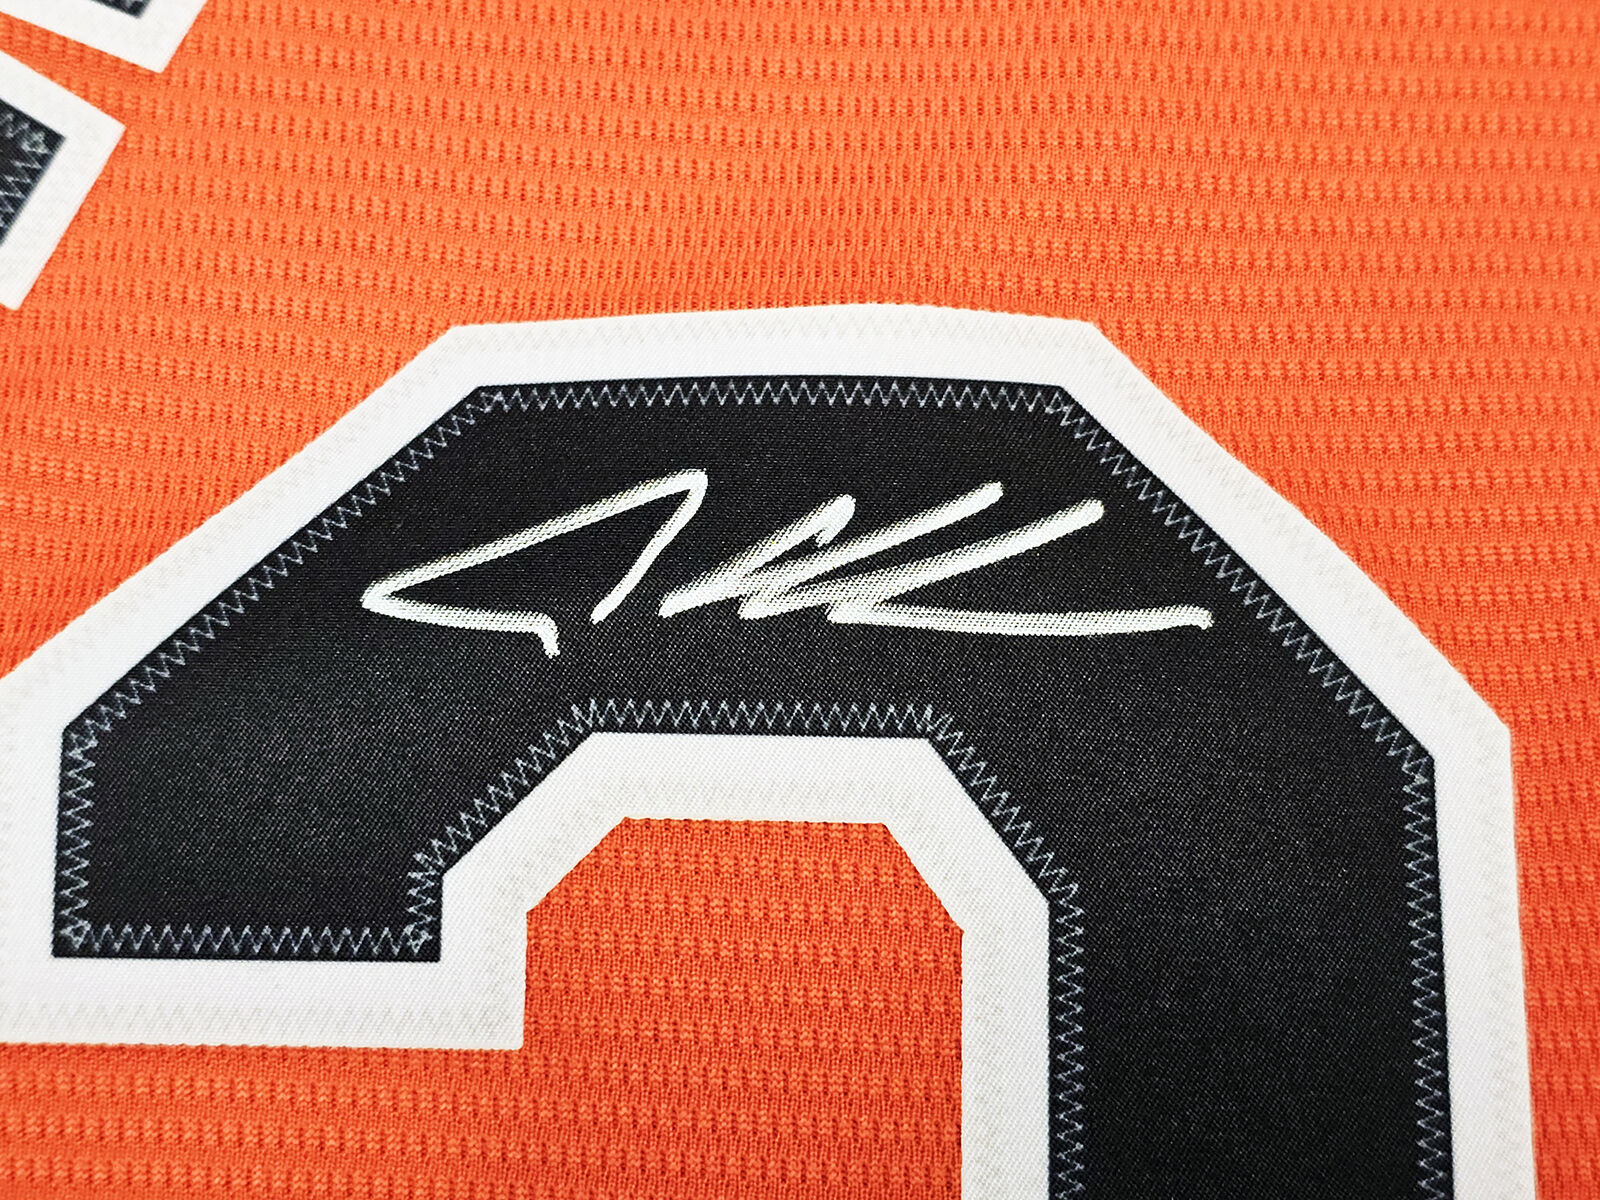 Baltimore Orioles Adley Rutschman Autographed Orange Nike Jersey Size L MLB  & Fanatics Holo Stock #220522